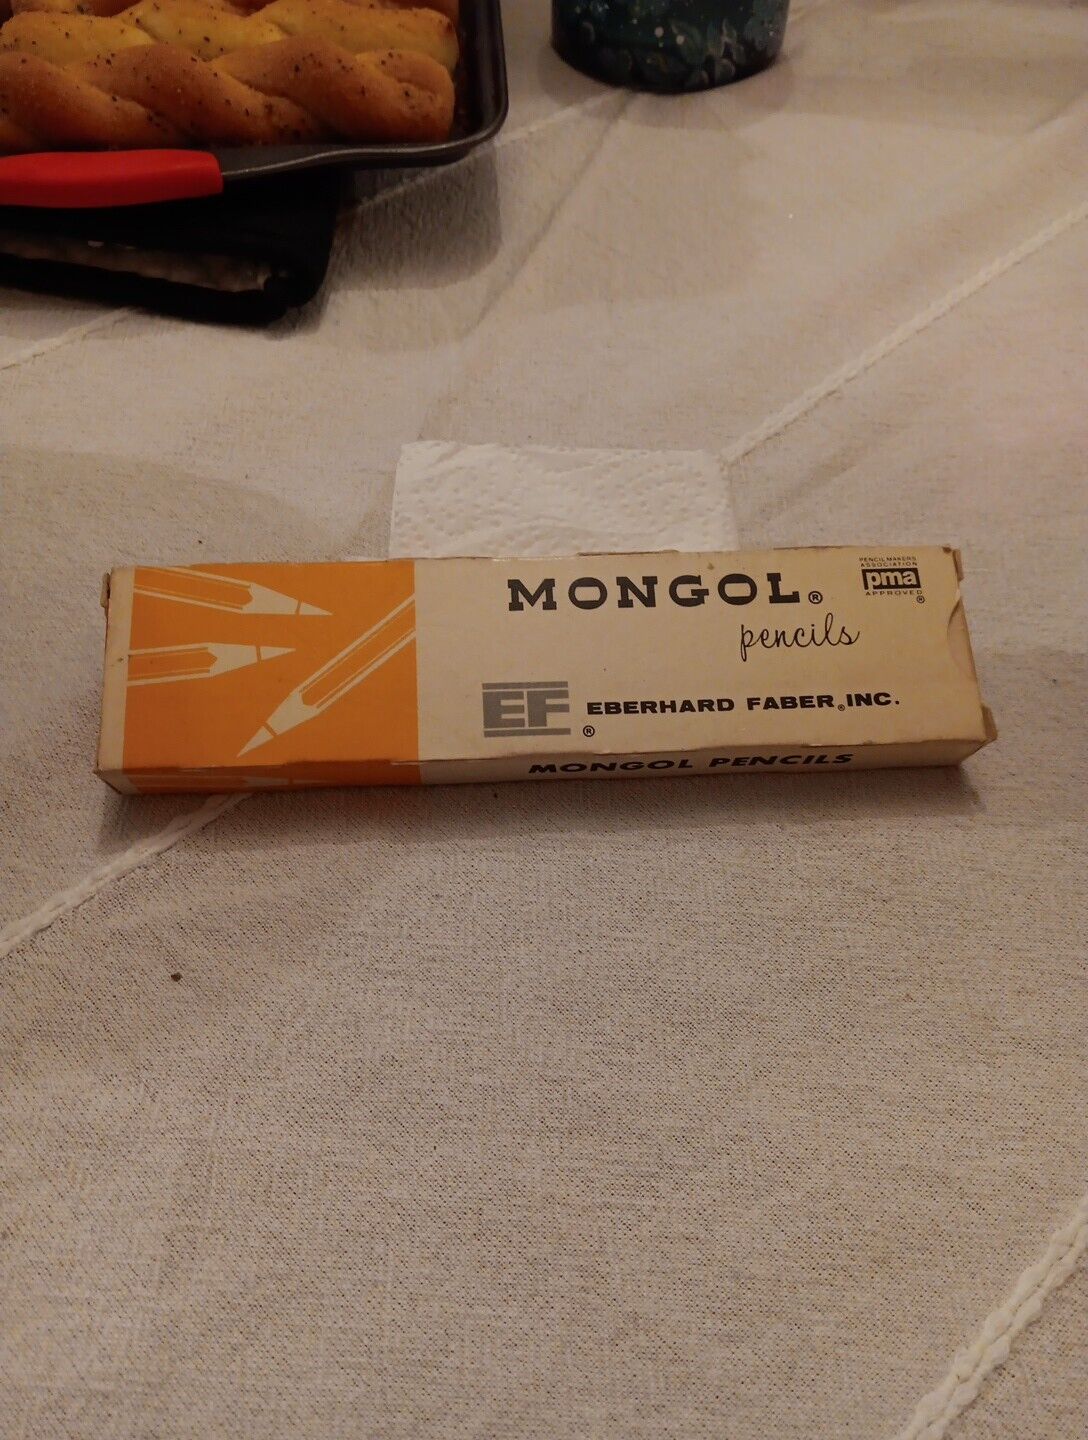 mongol no. 2 pencils